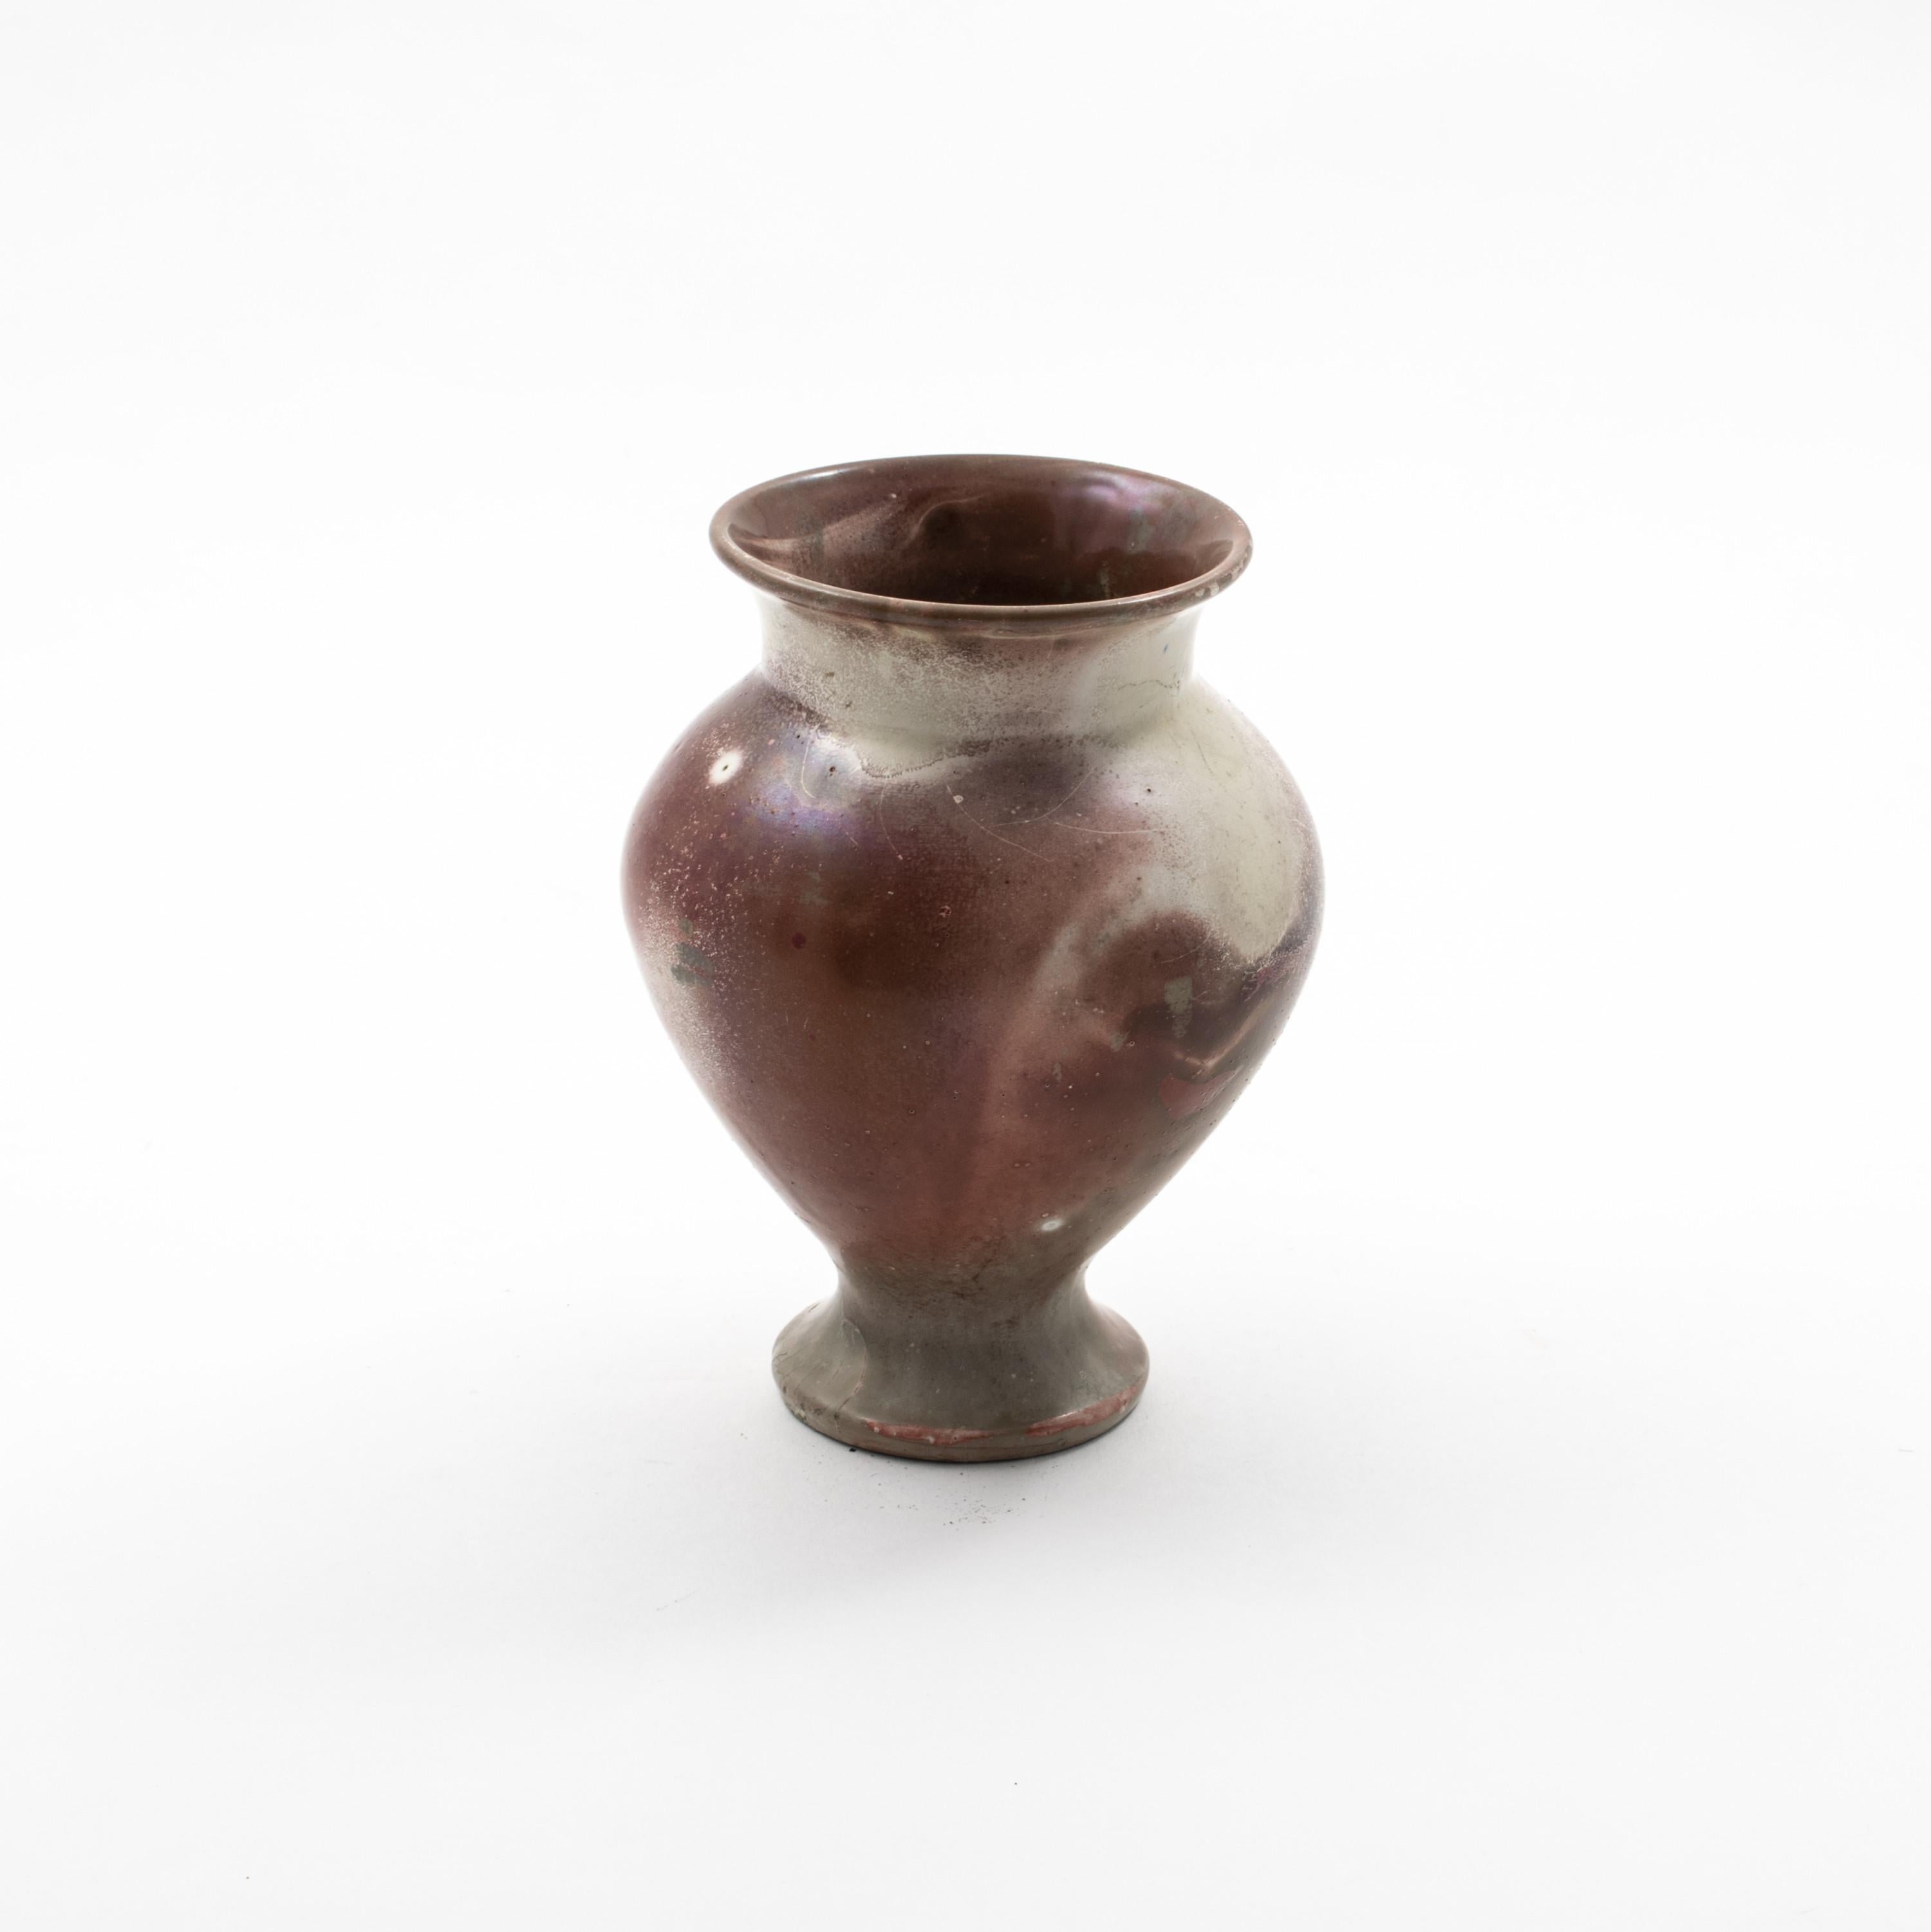 Svend Hammershøi 1873 - 1948.

Ceramic vase with rosa and white glaze.
Vase by Kähler approx. 1930.